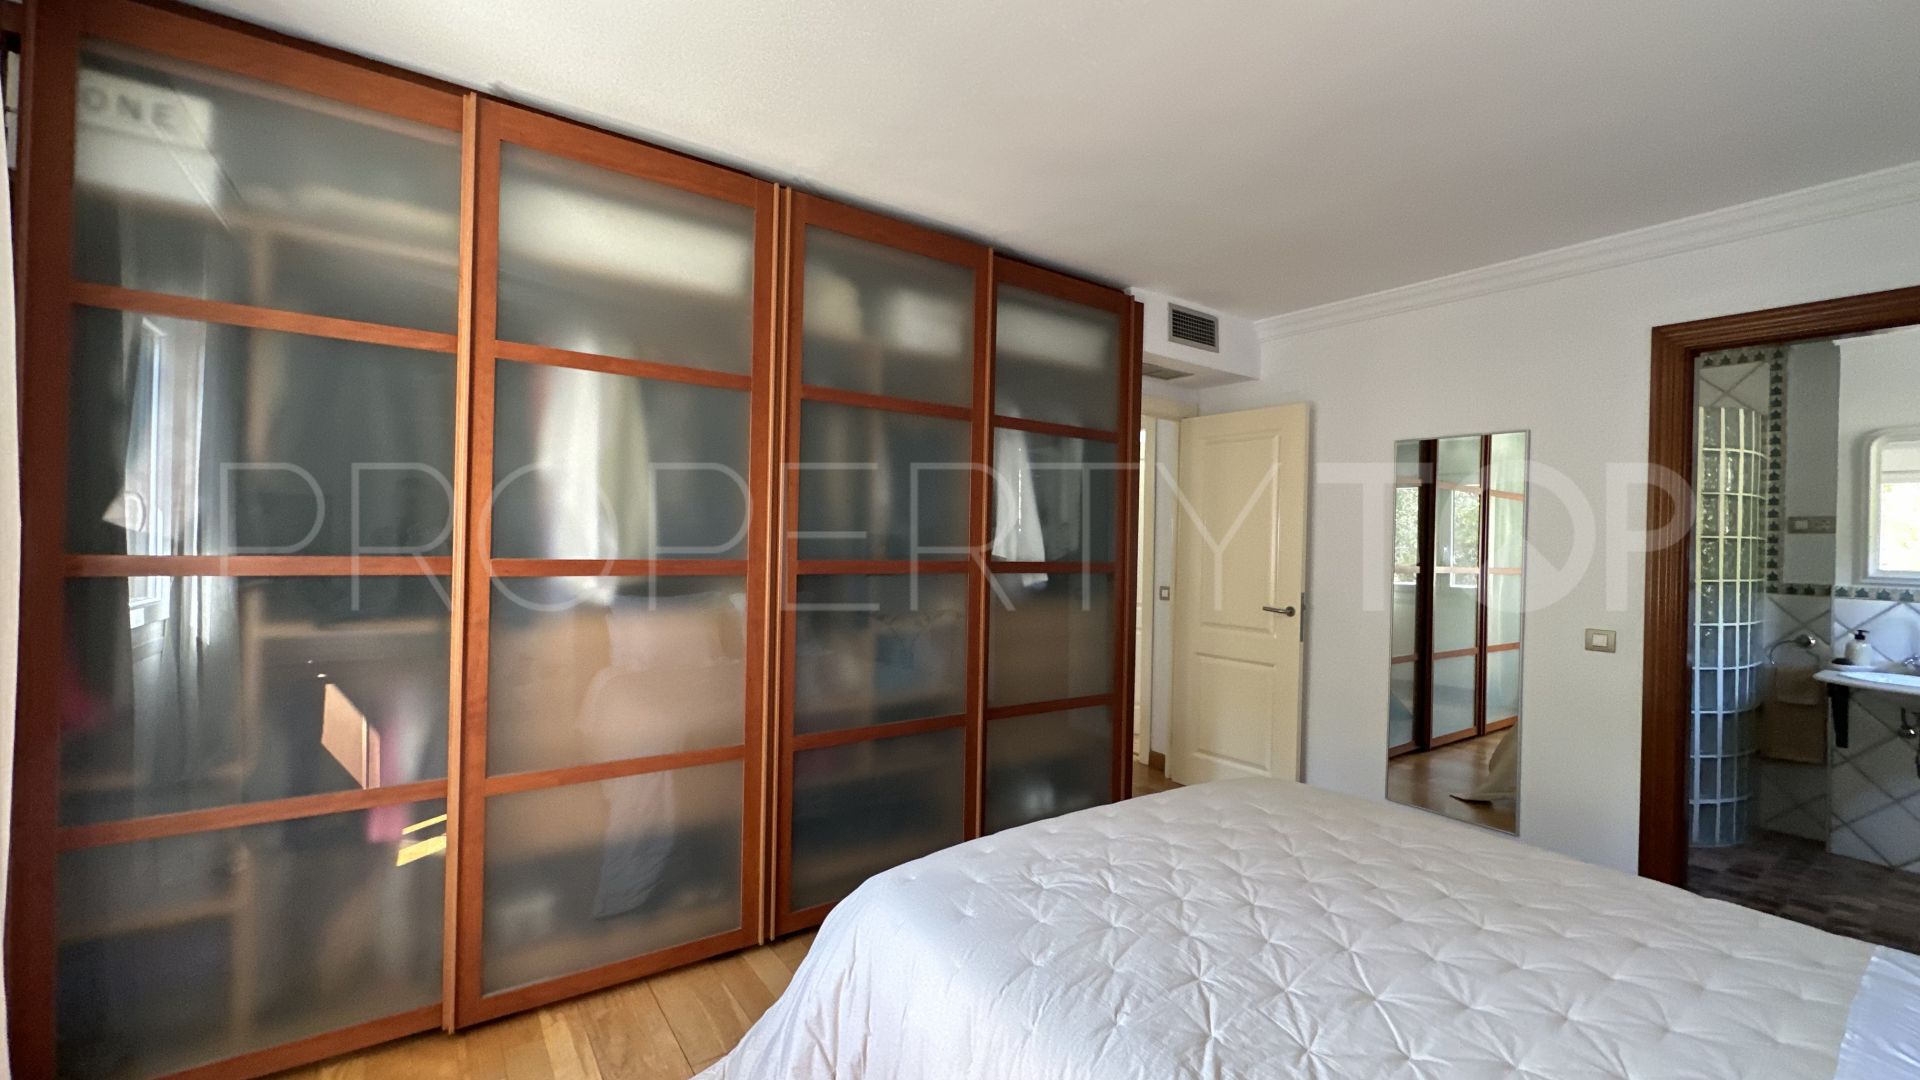 3 bedrooms flat in Malaga - Este for sale